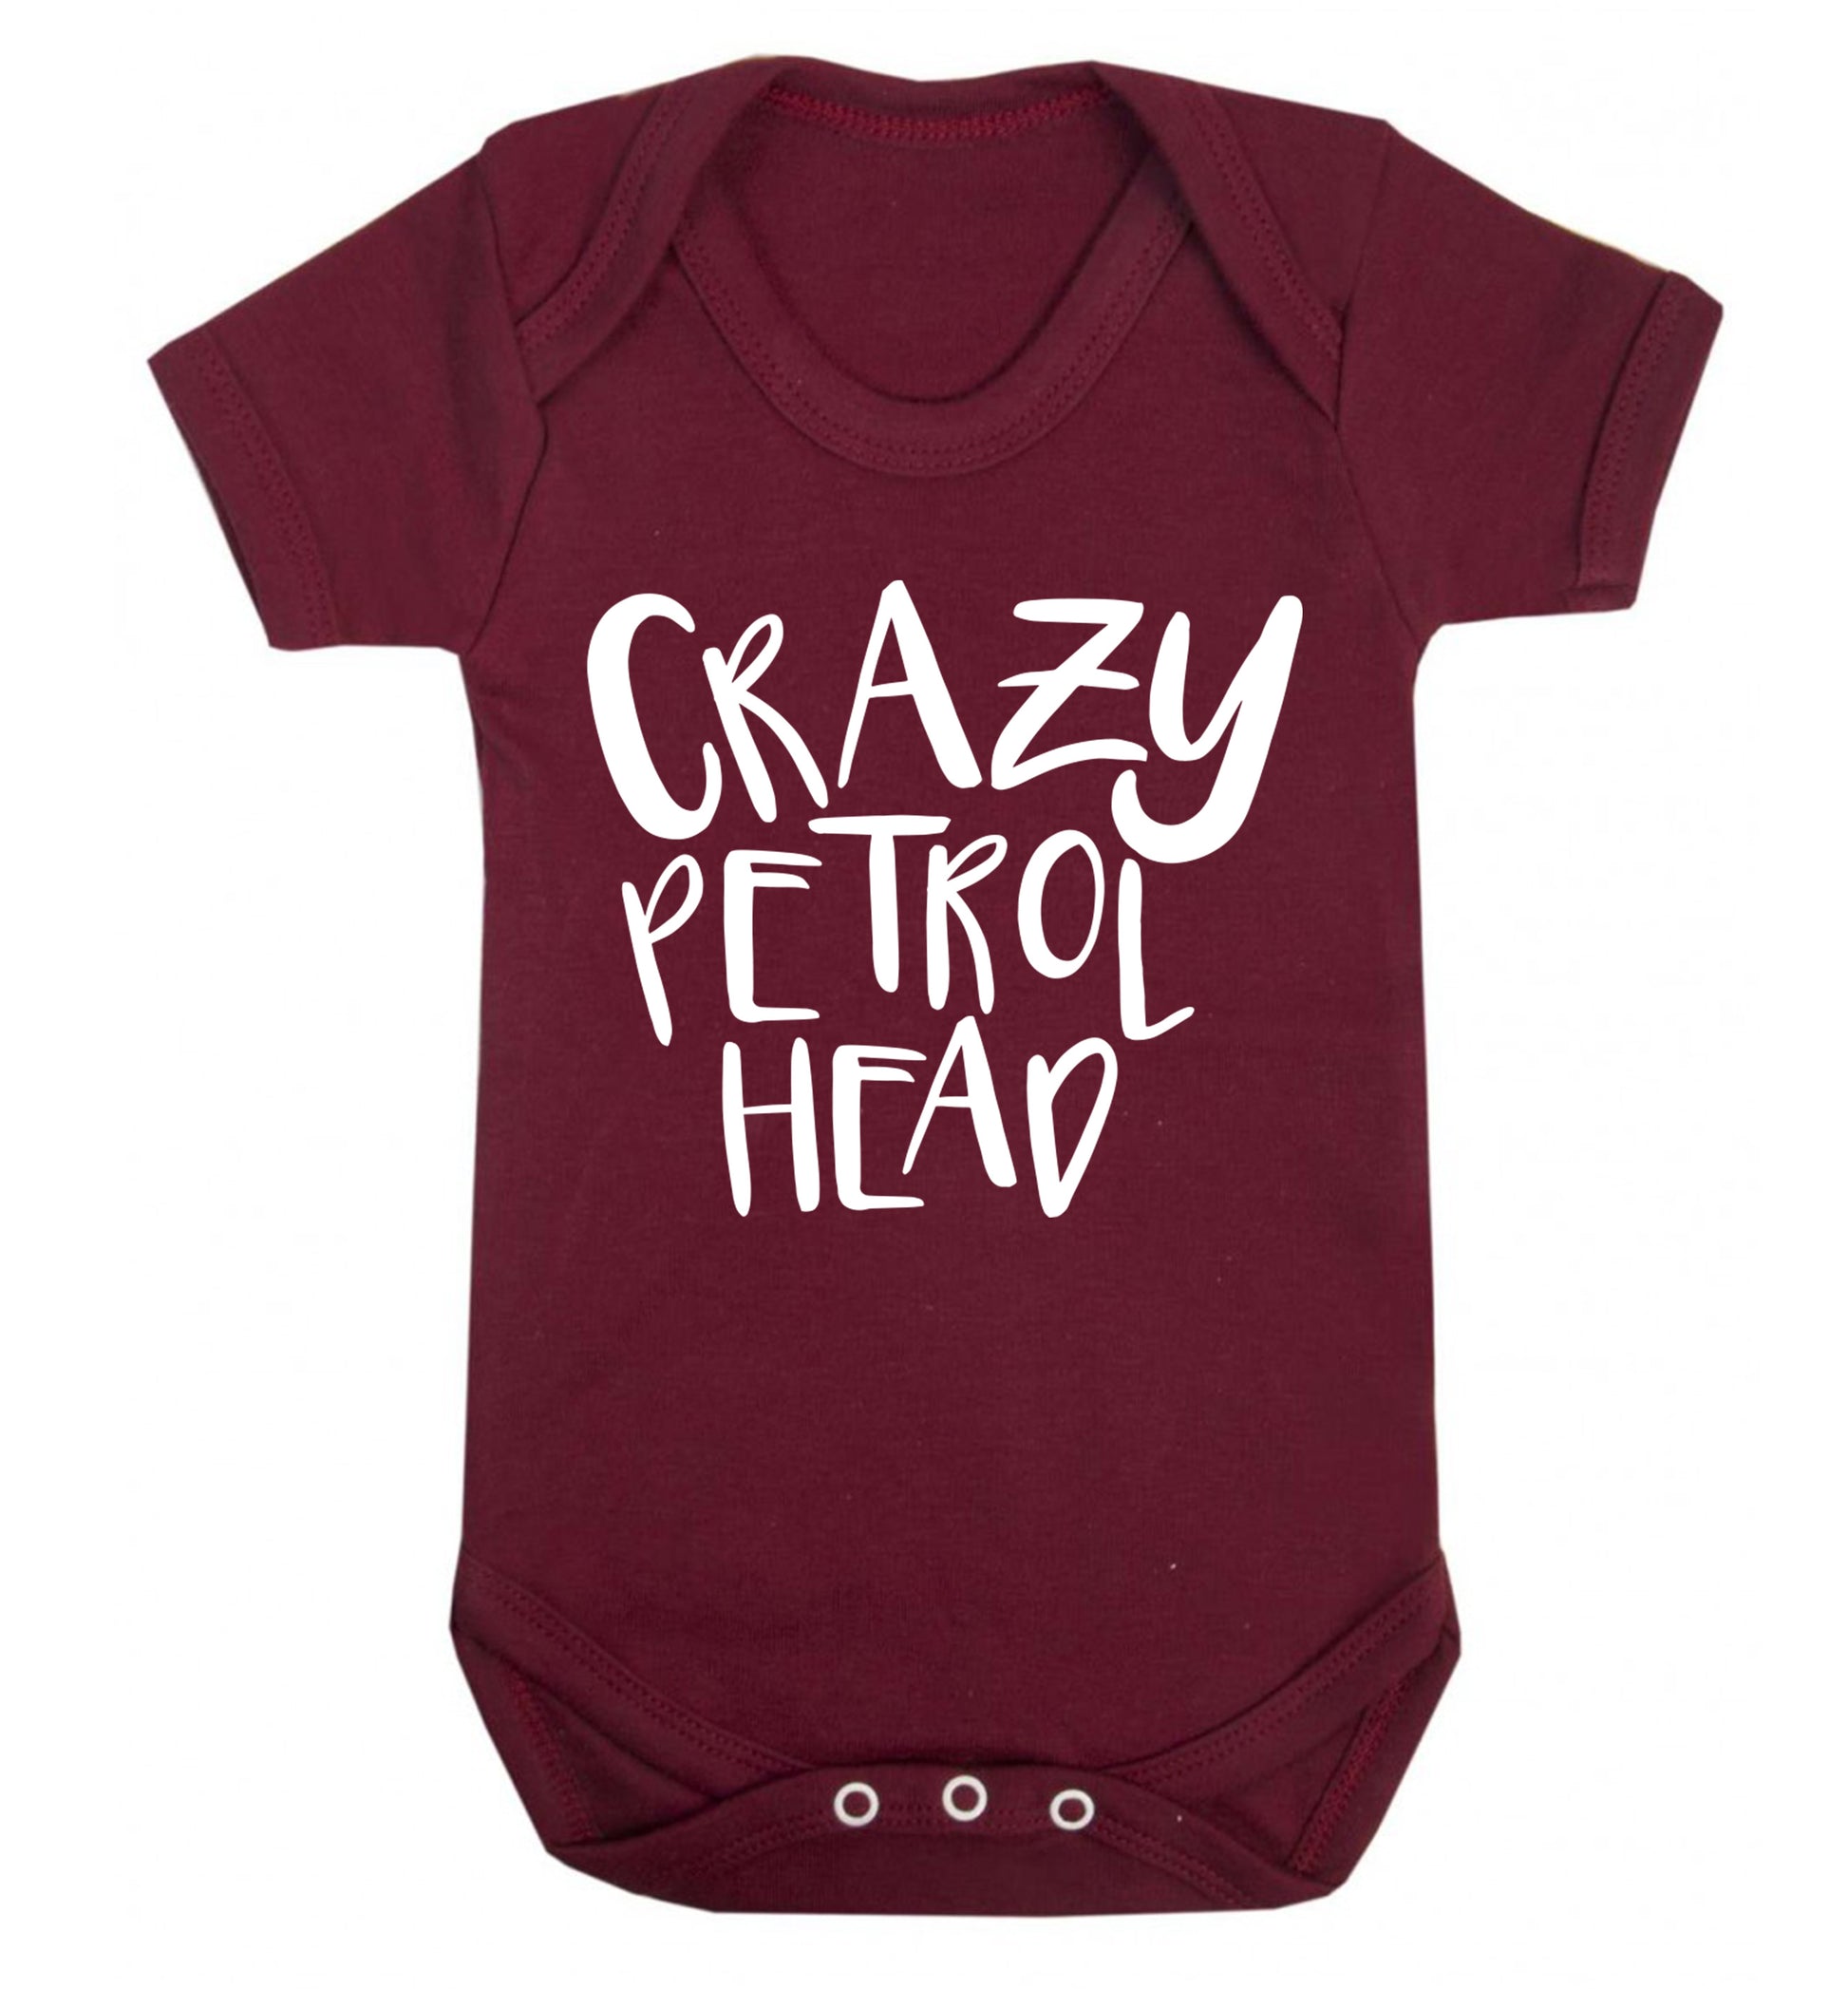 Crazy petrol head Baby Vest maroon 18-24 months